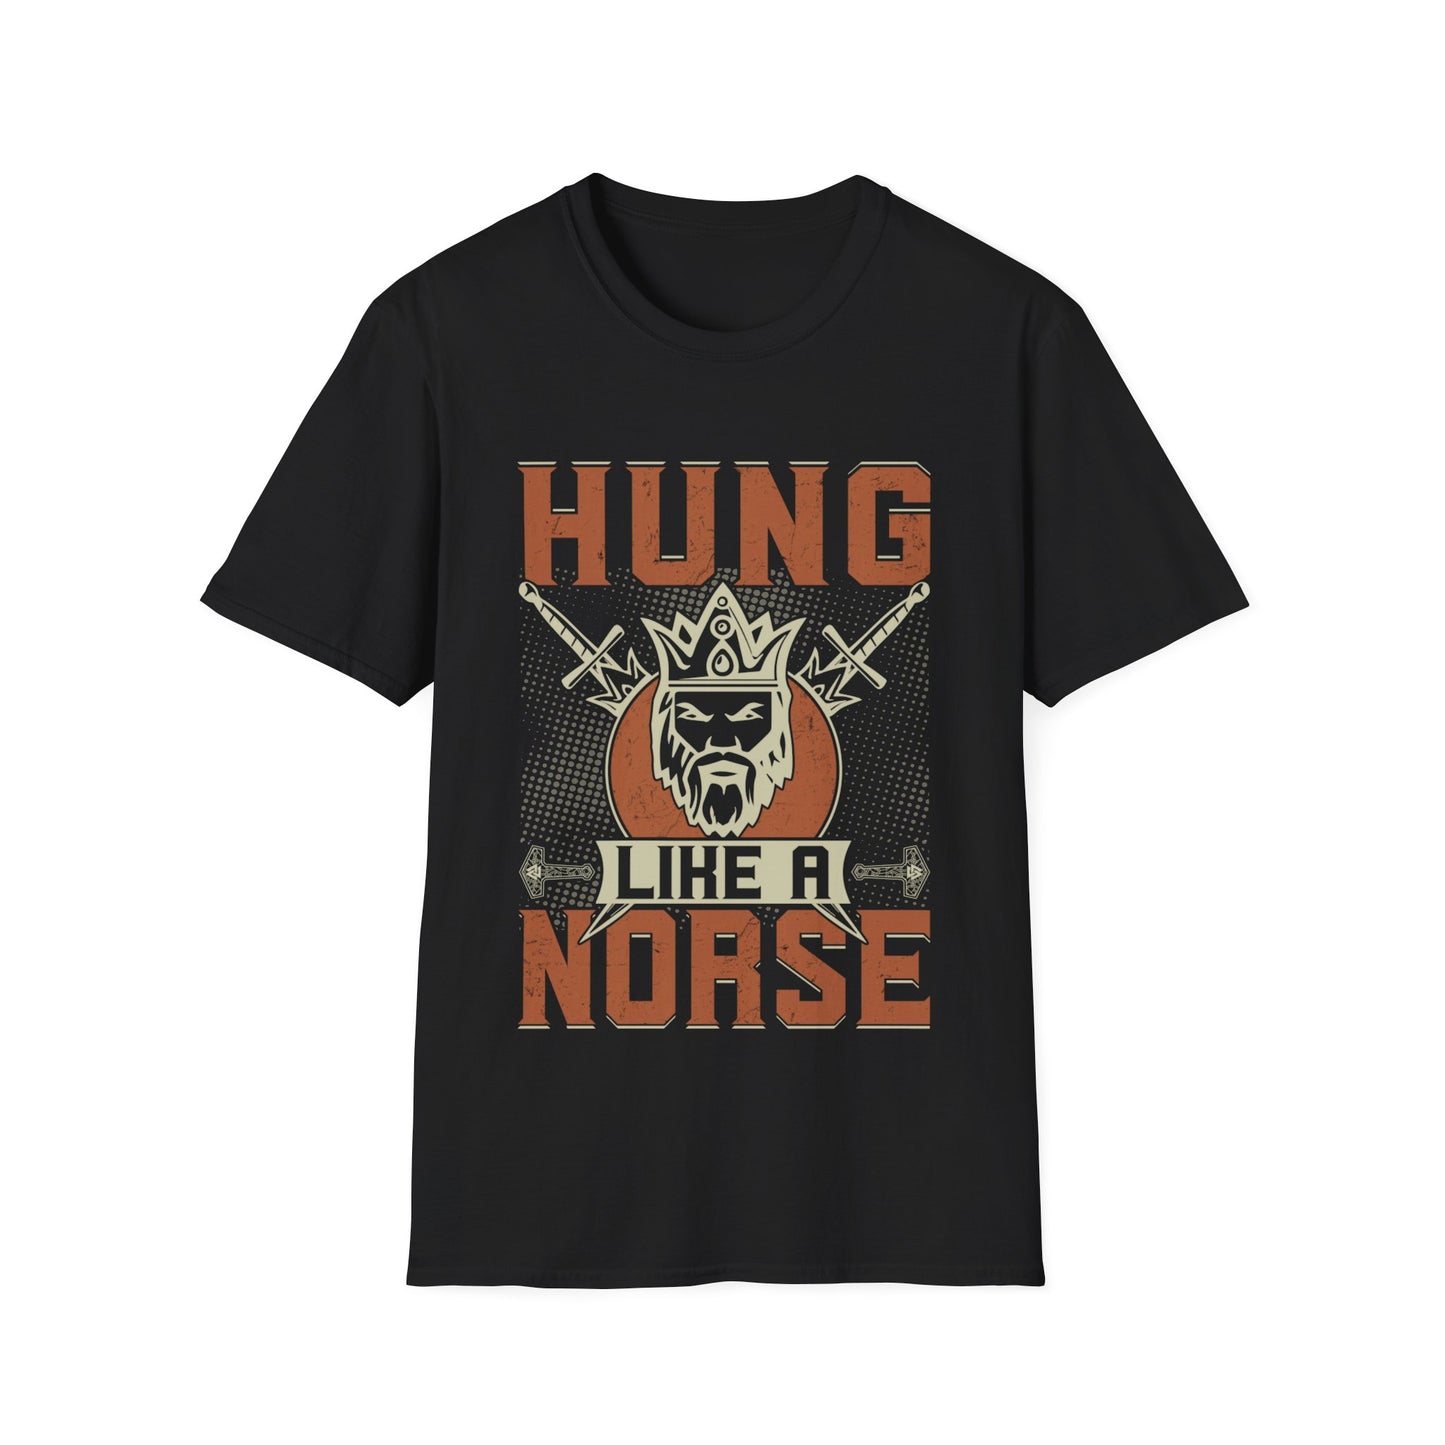 Hung Loke A Norse T-Shirt